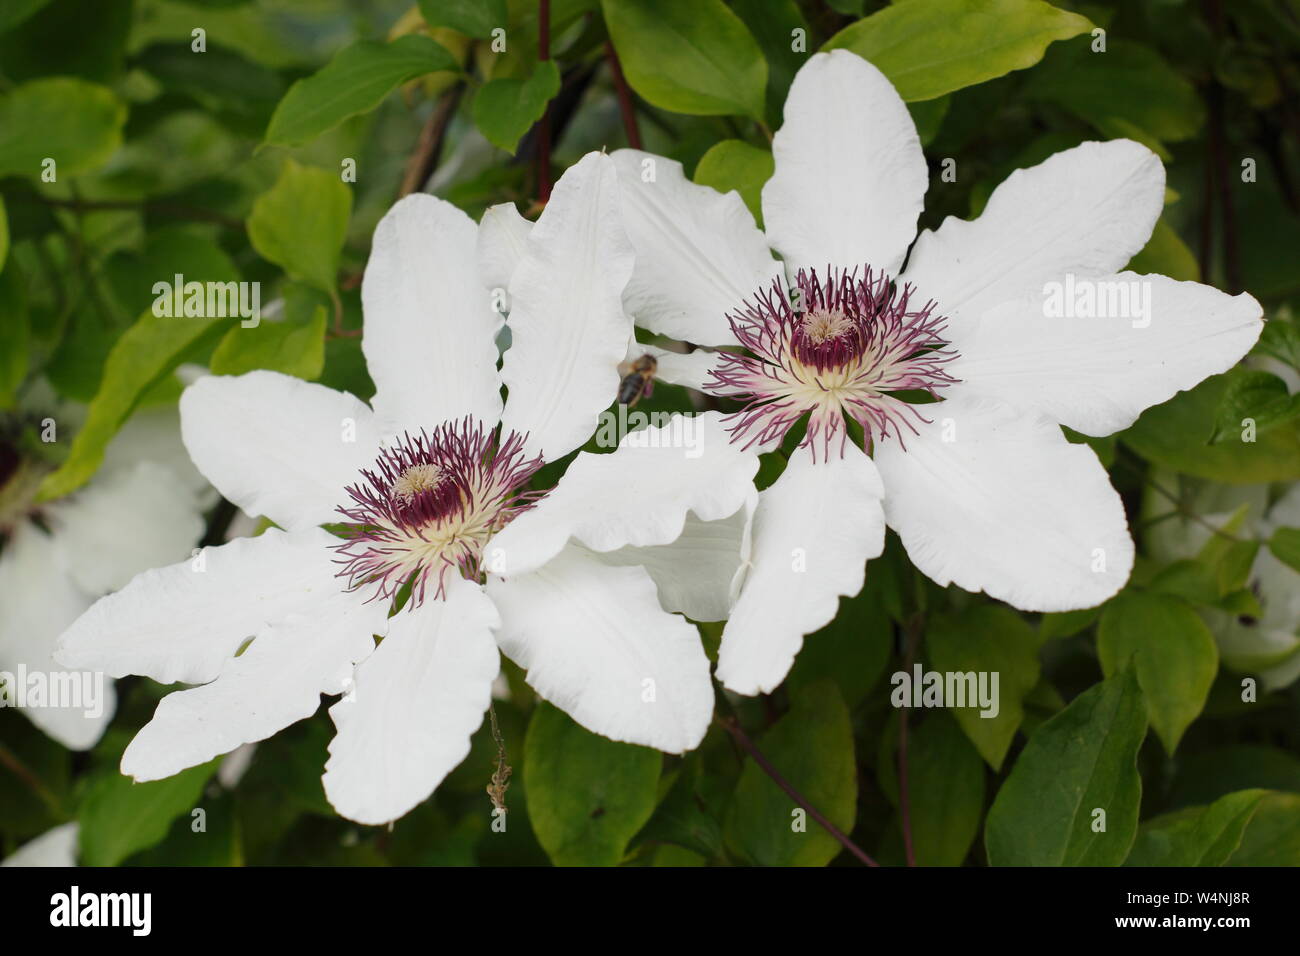 Clematis "Boda" florece a comienzos del verano. Grupo 2 clematis. Foto de stock